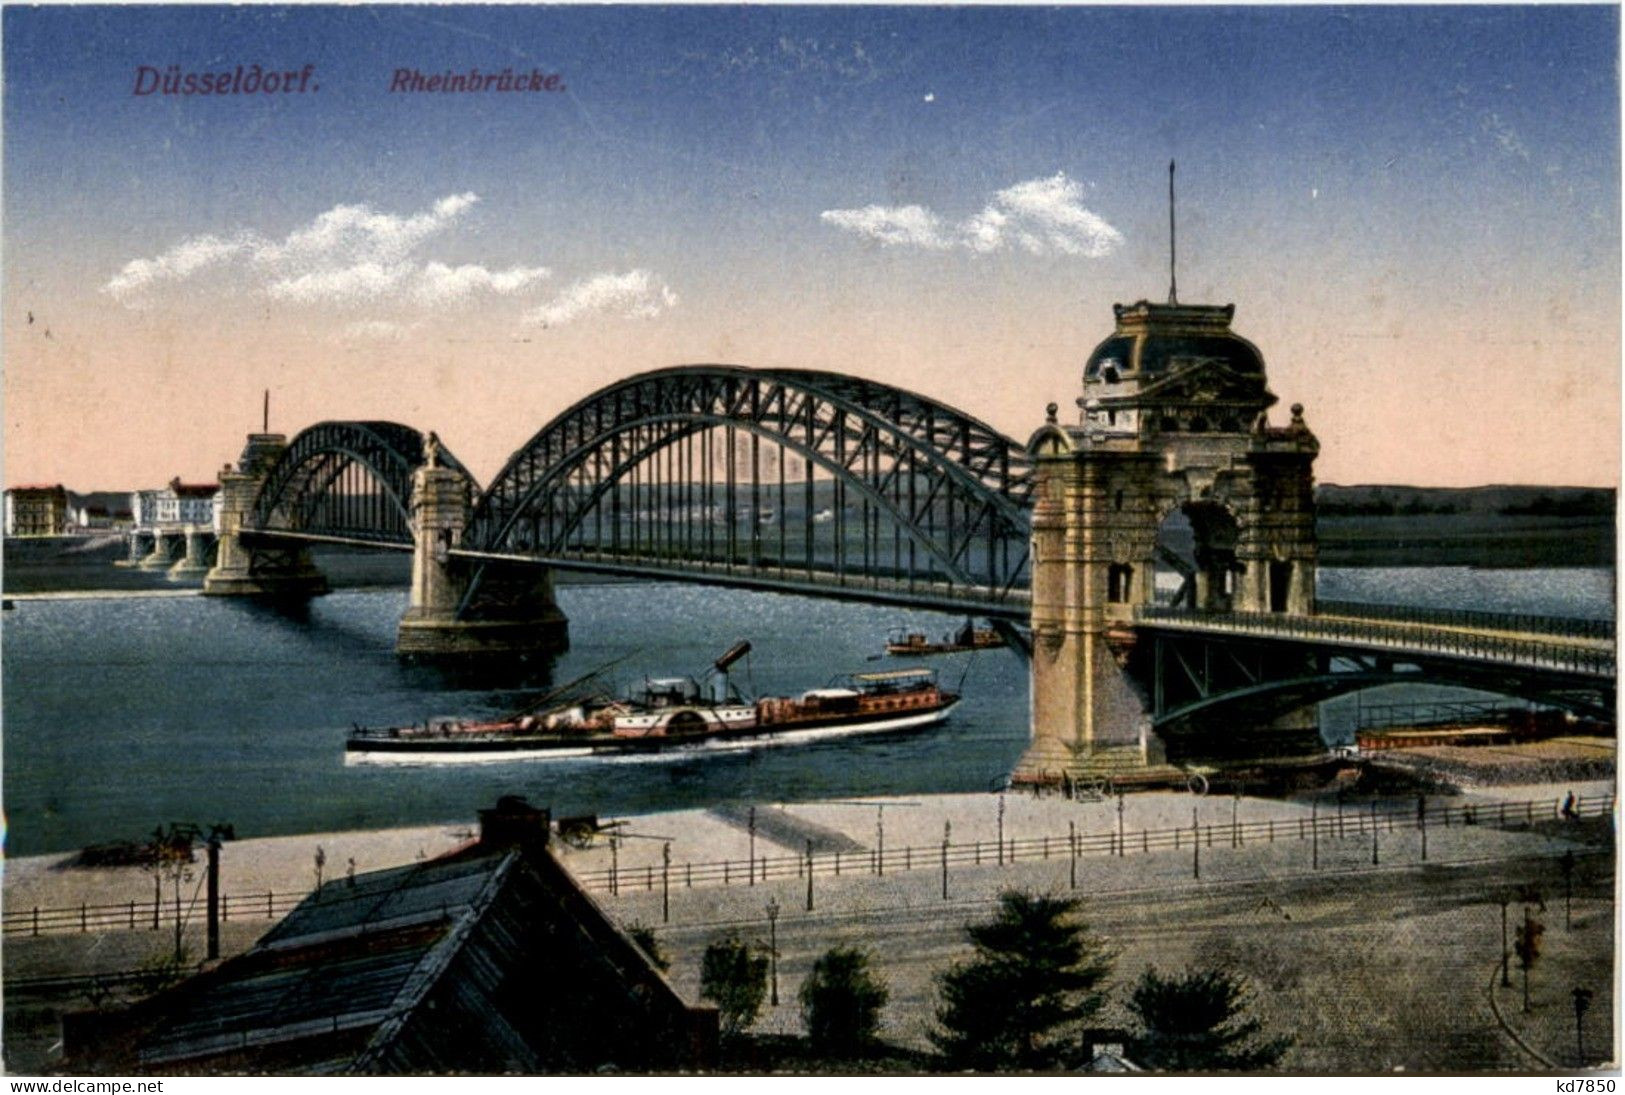 Düsseldorf - Rheinbrücke - Duesseldorf